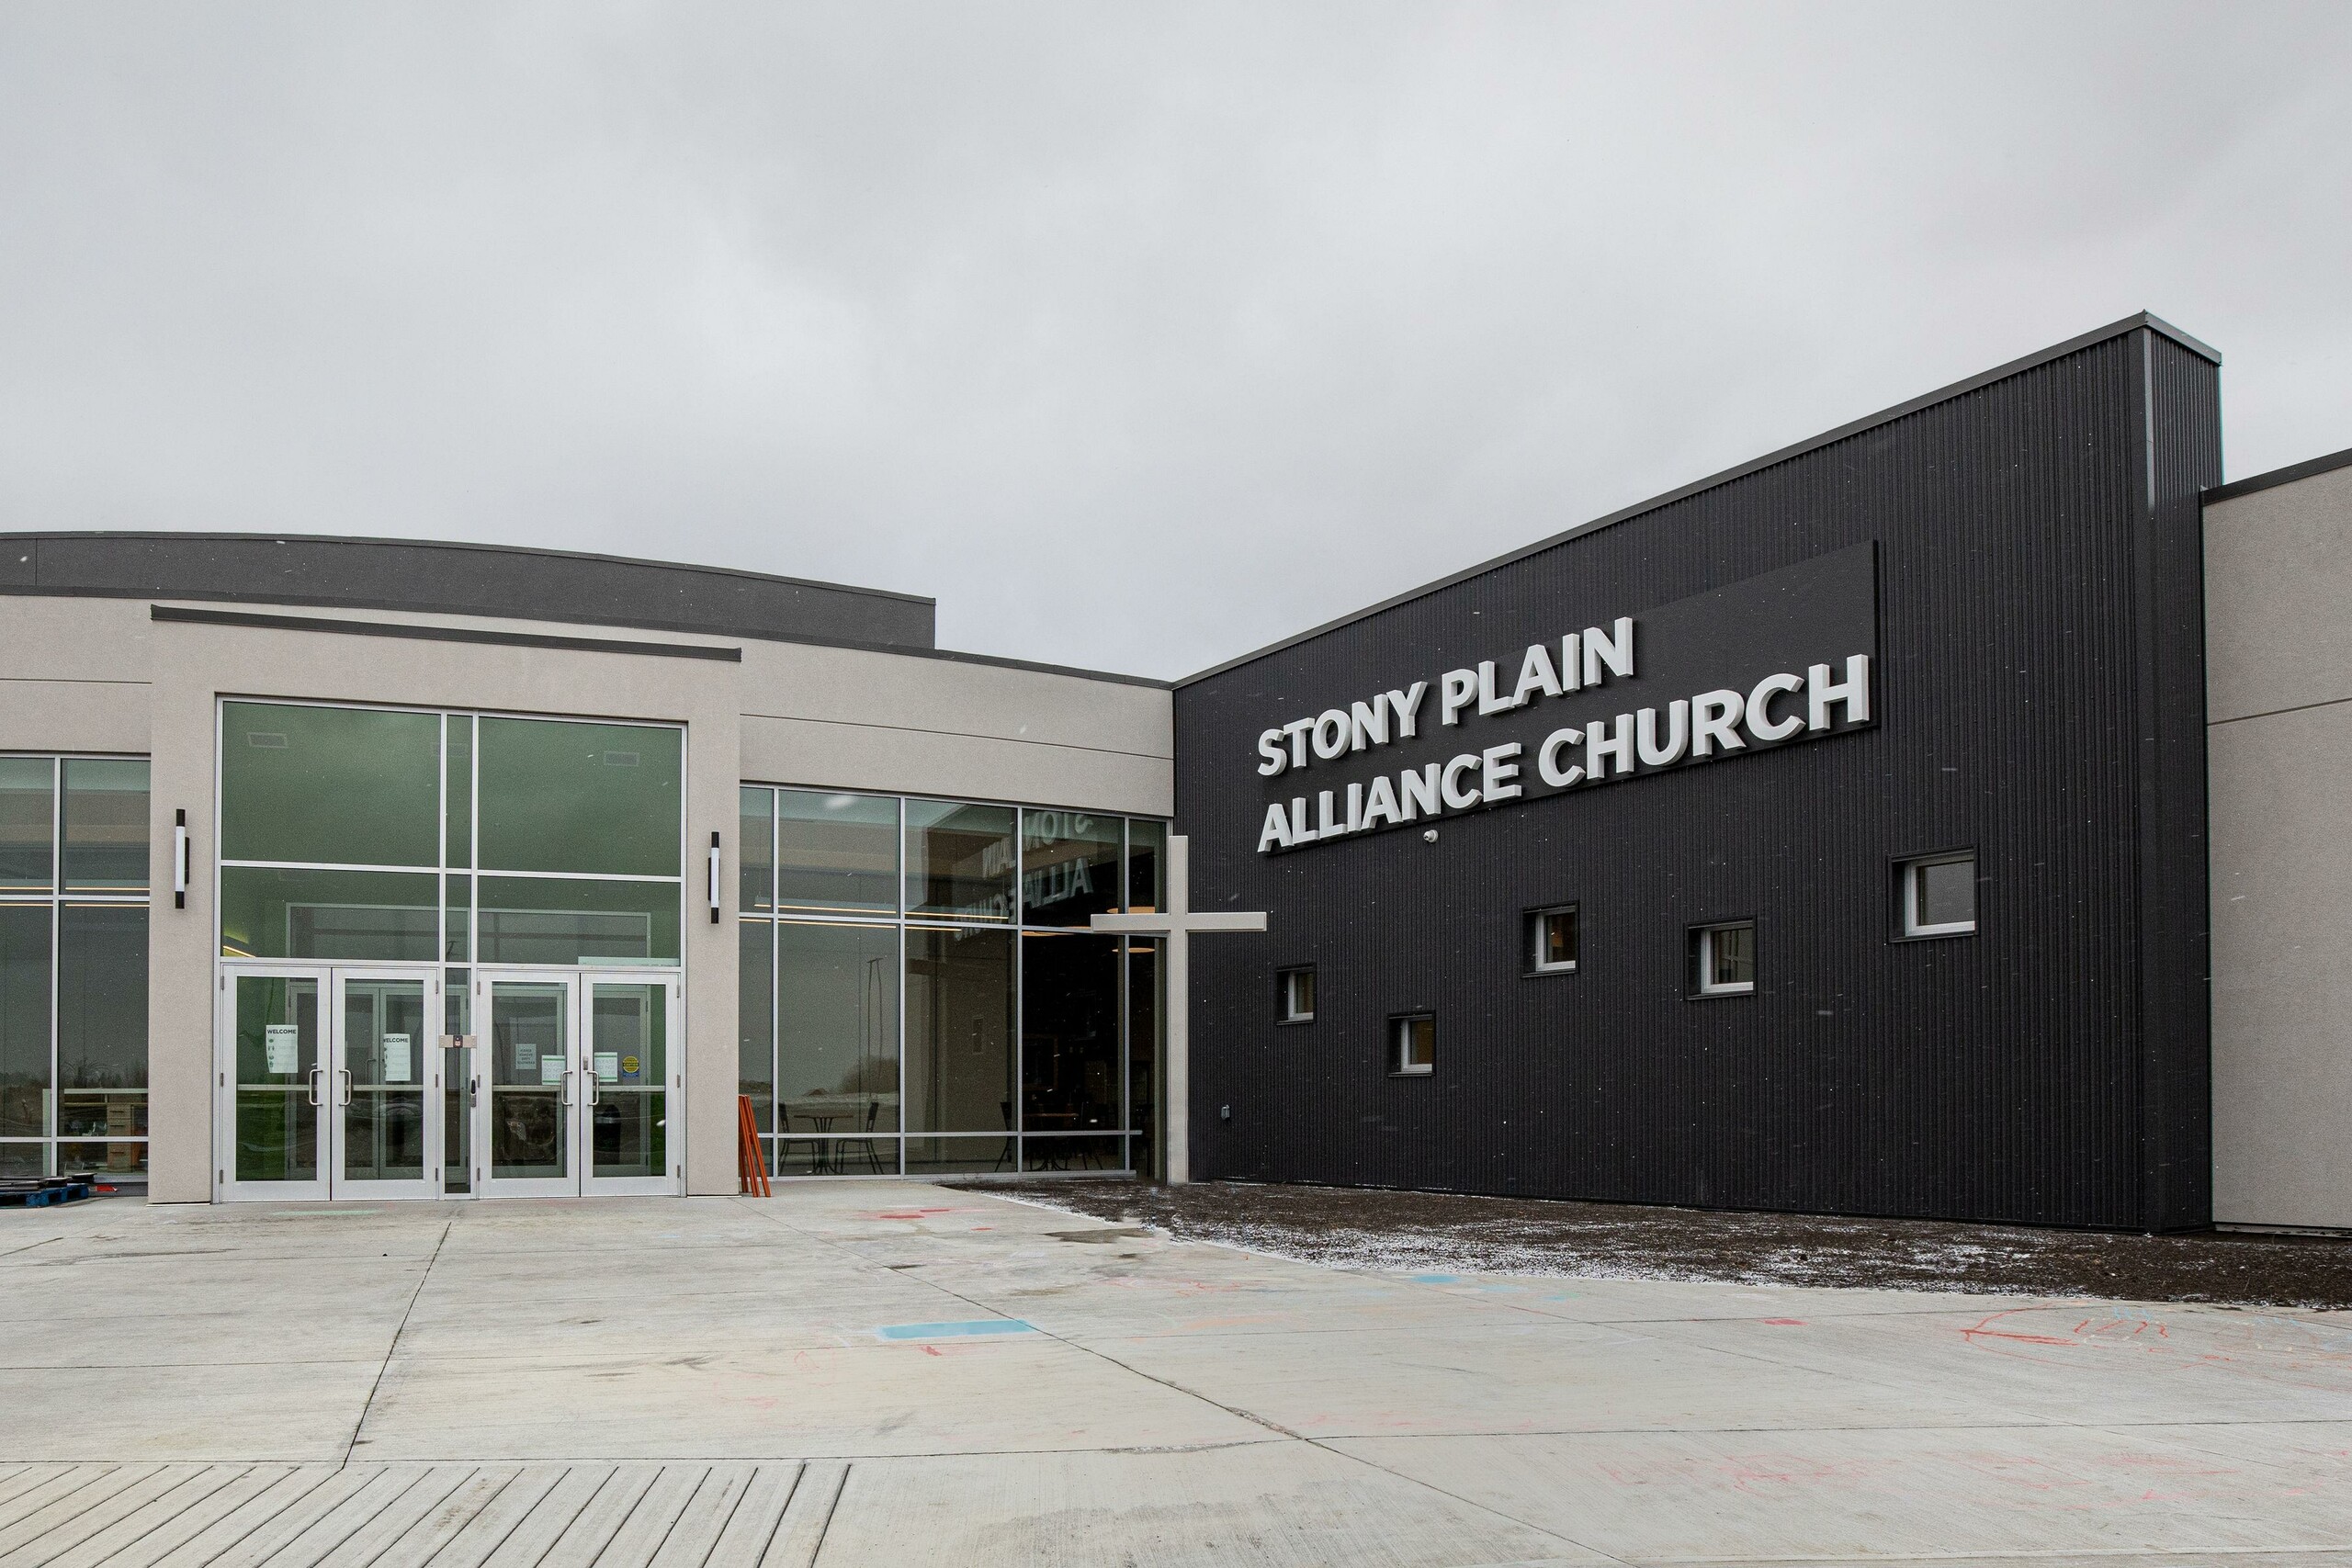 Stony Plain Alliance Church: Projects - Delnor